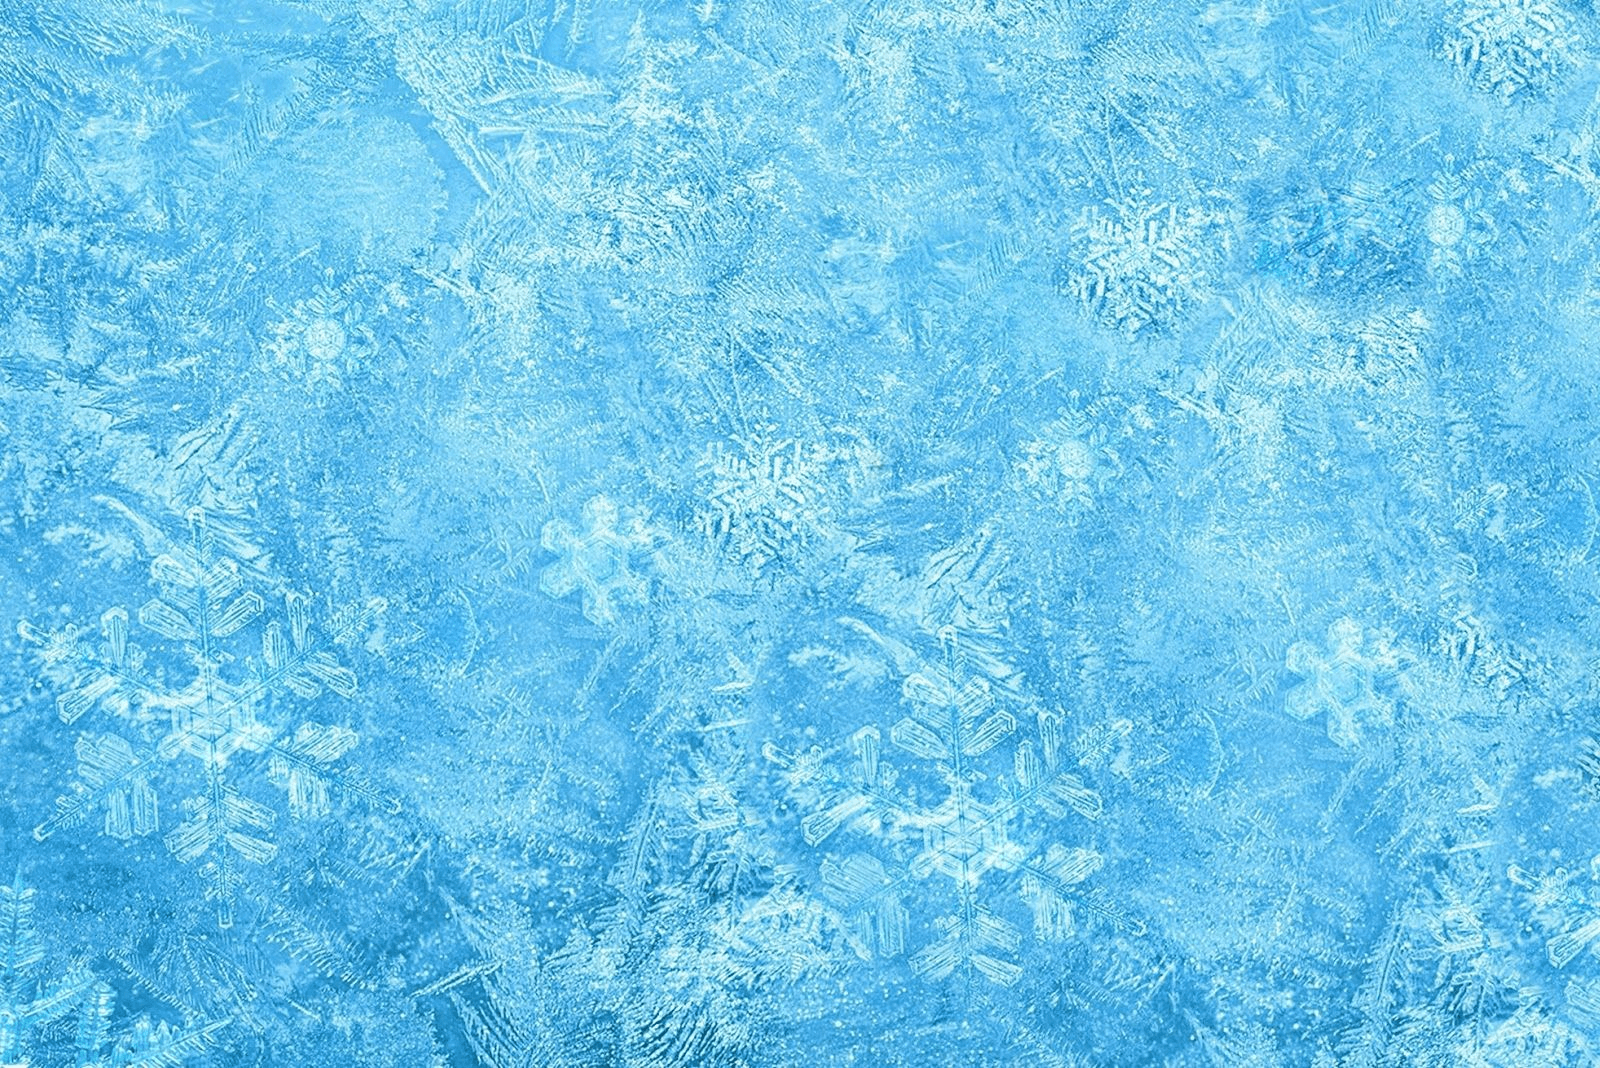 Frozen Winter Pattern Background Board Decoration Decor Icing Sheet